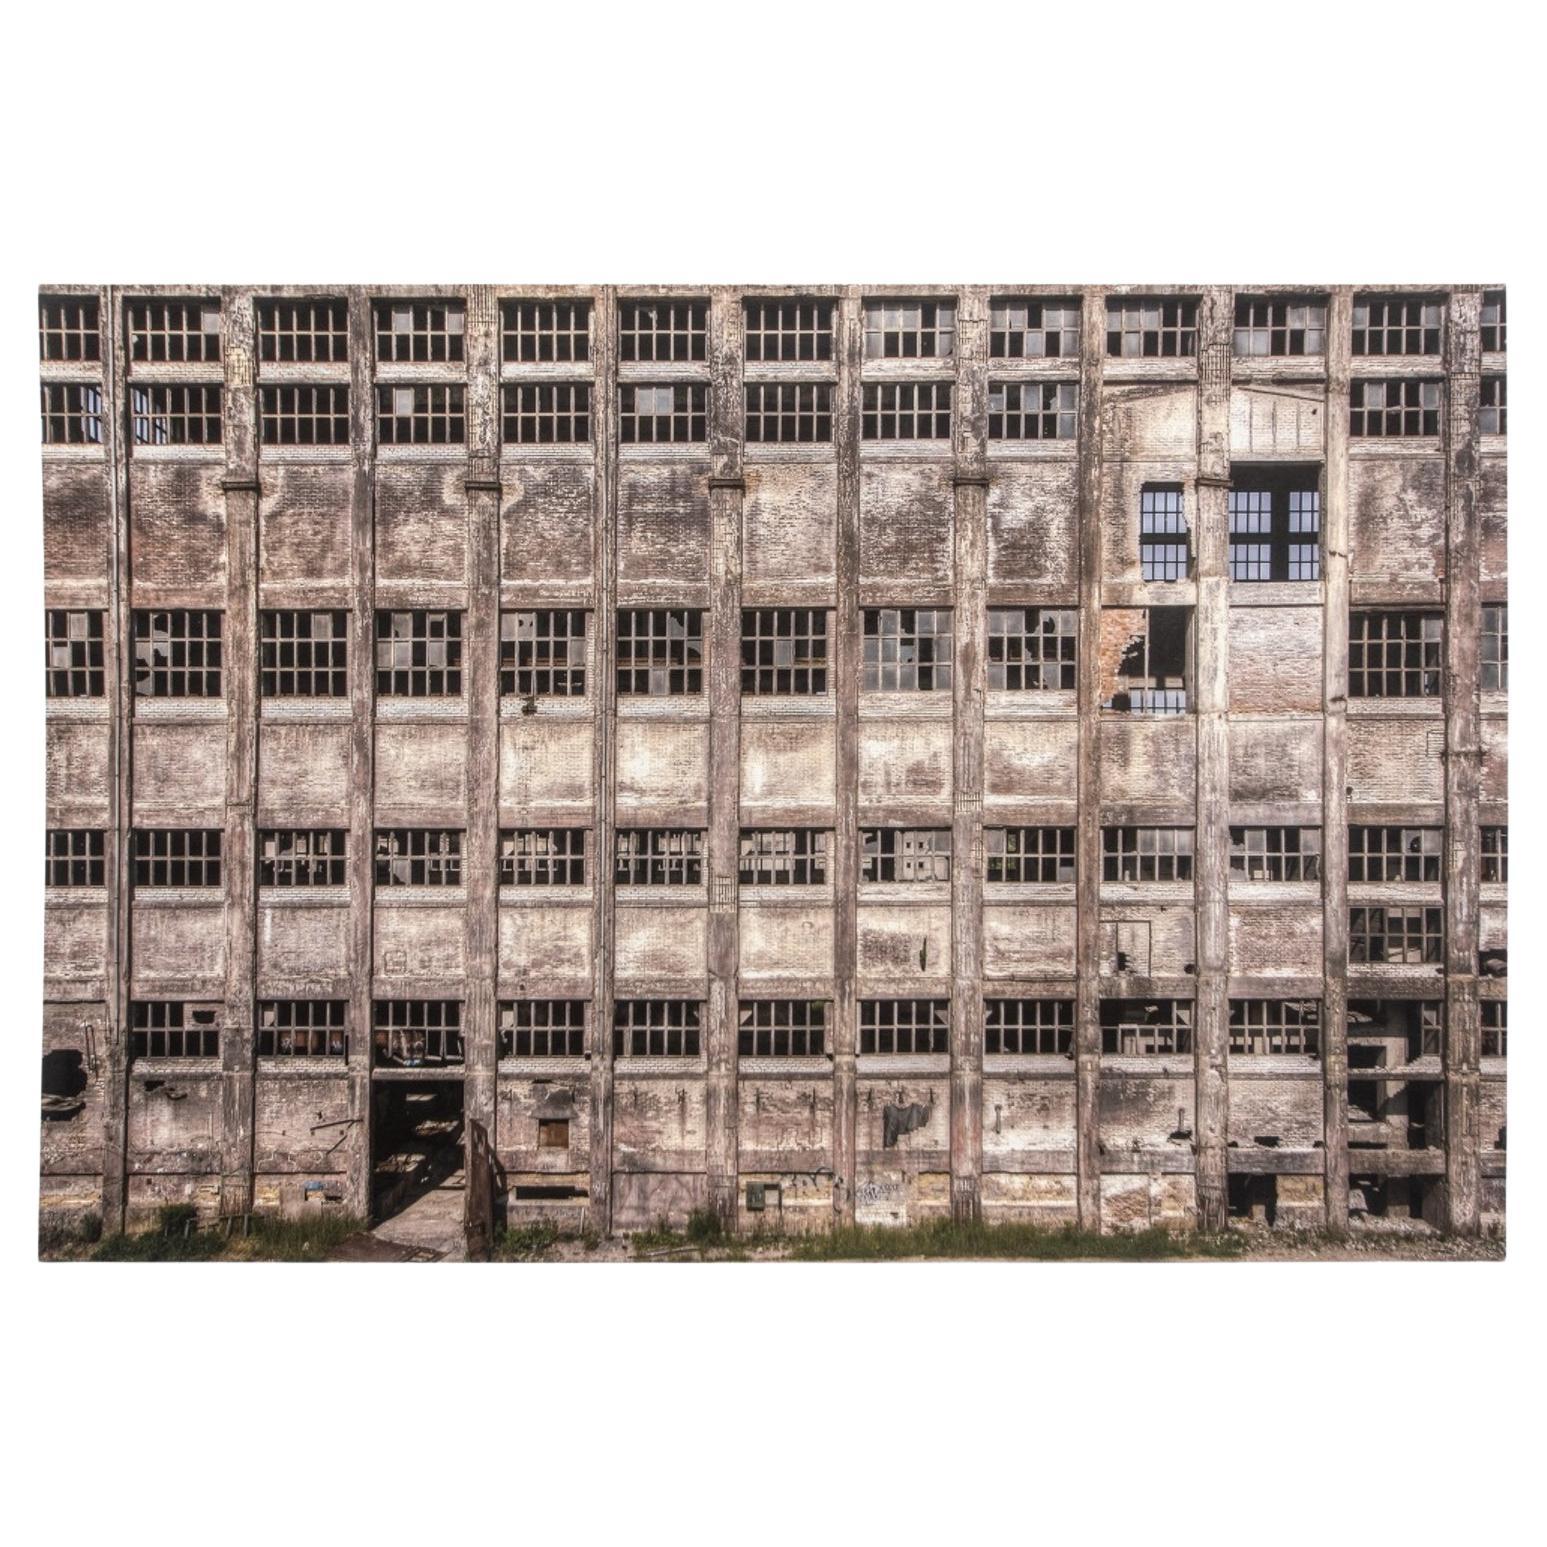 Digitaldruck „Mondrian's Facade“ von Ciborowski, 2014